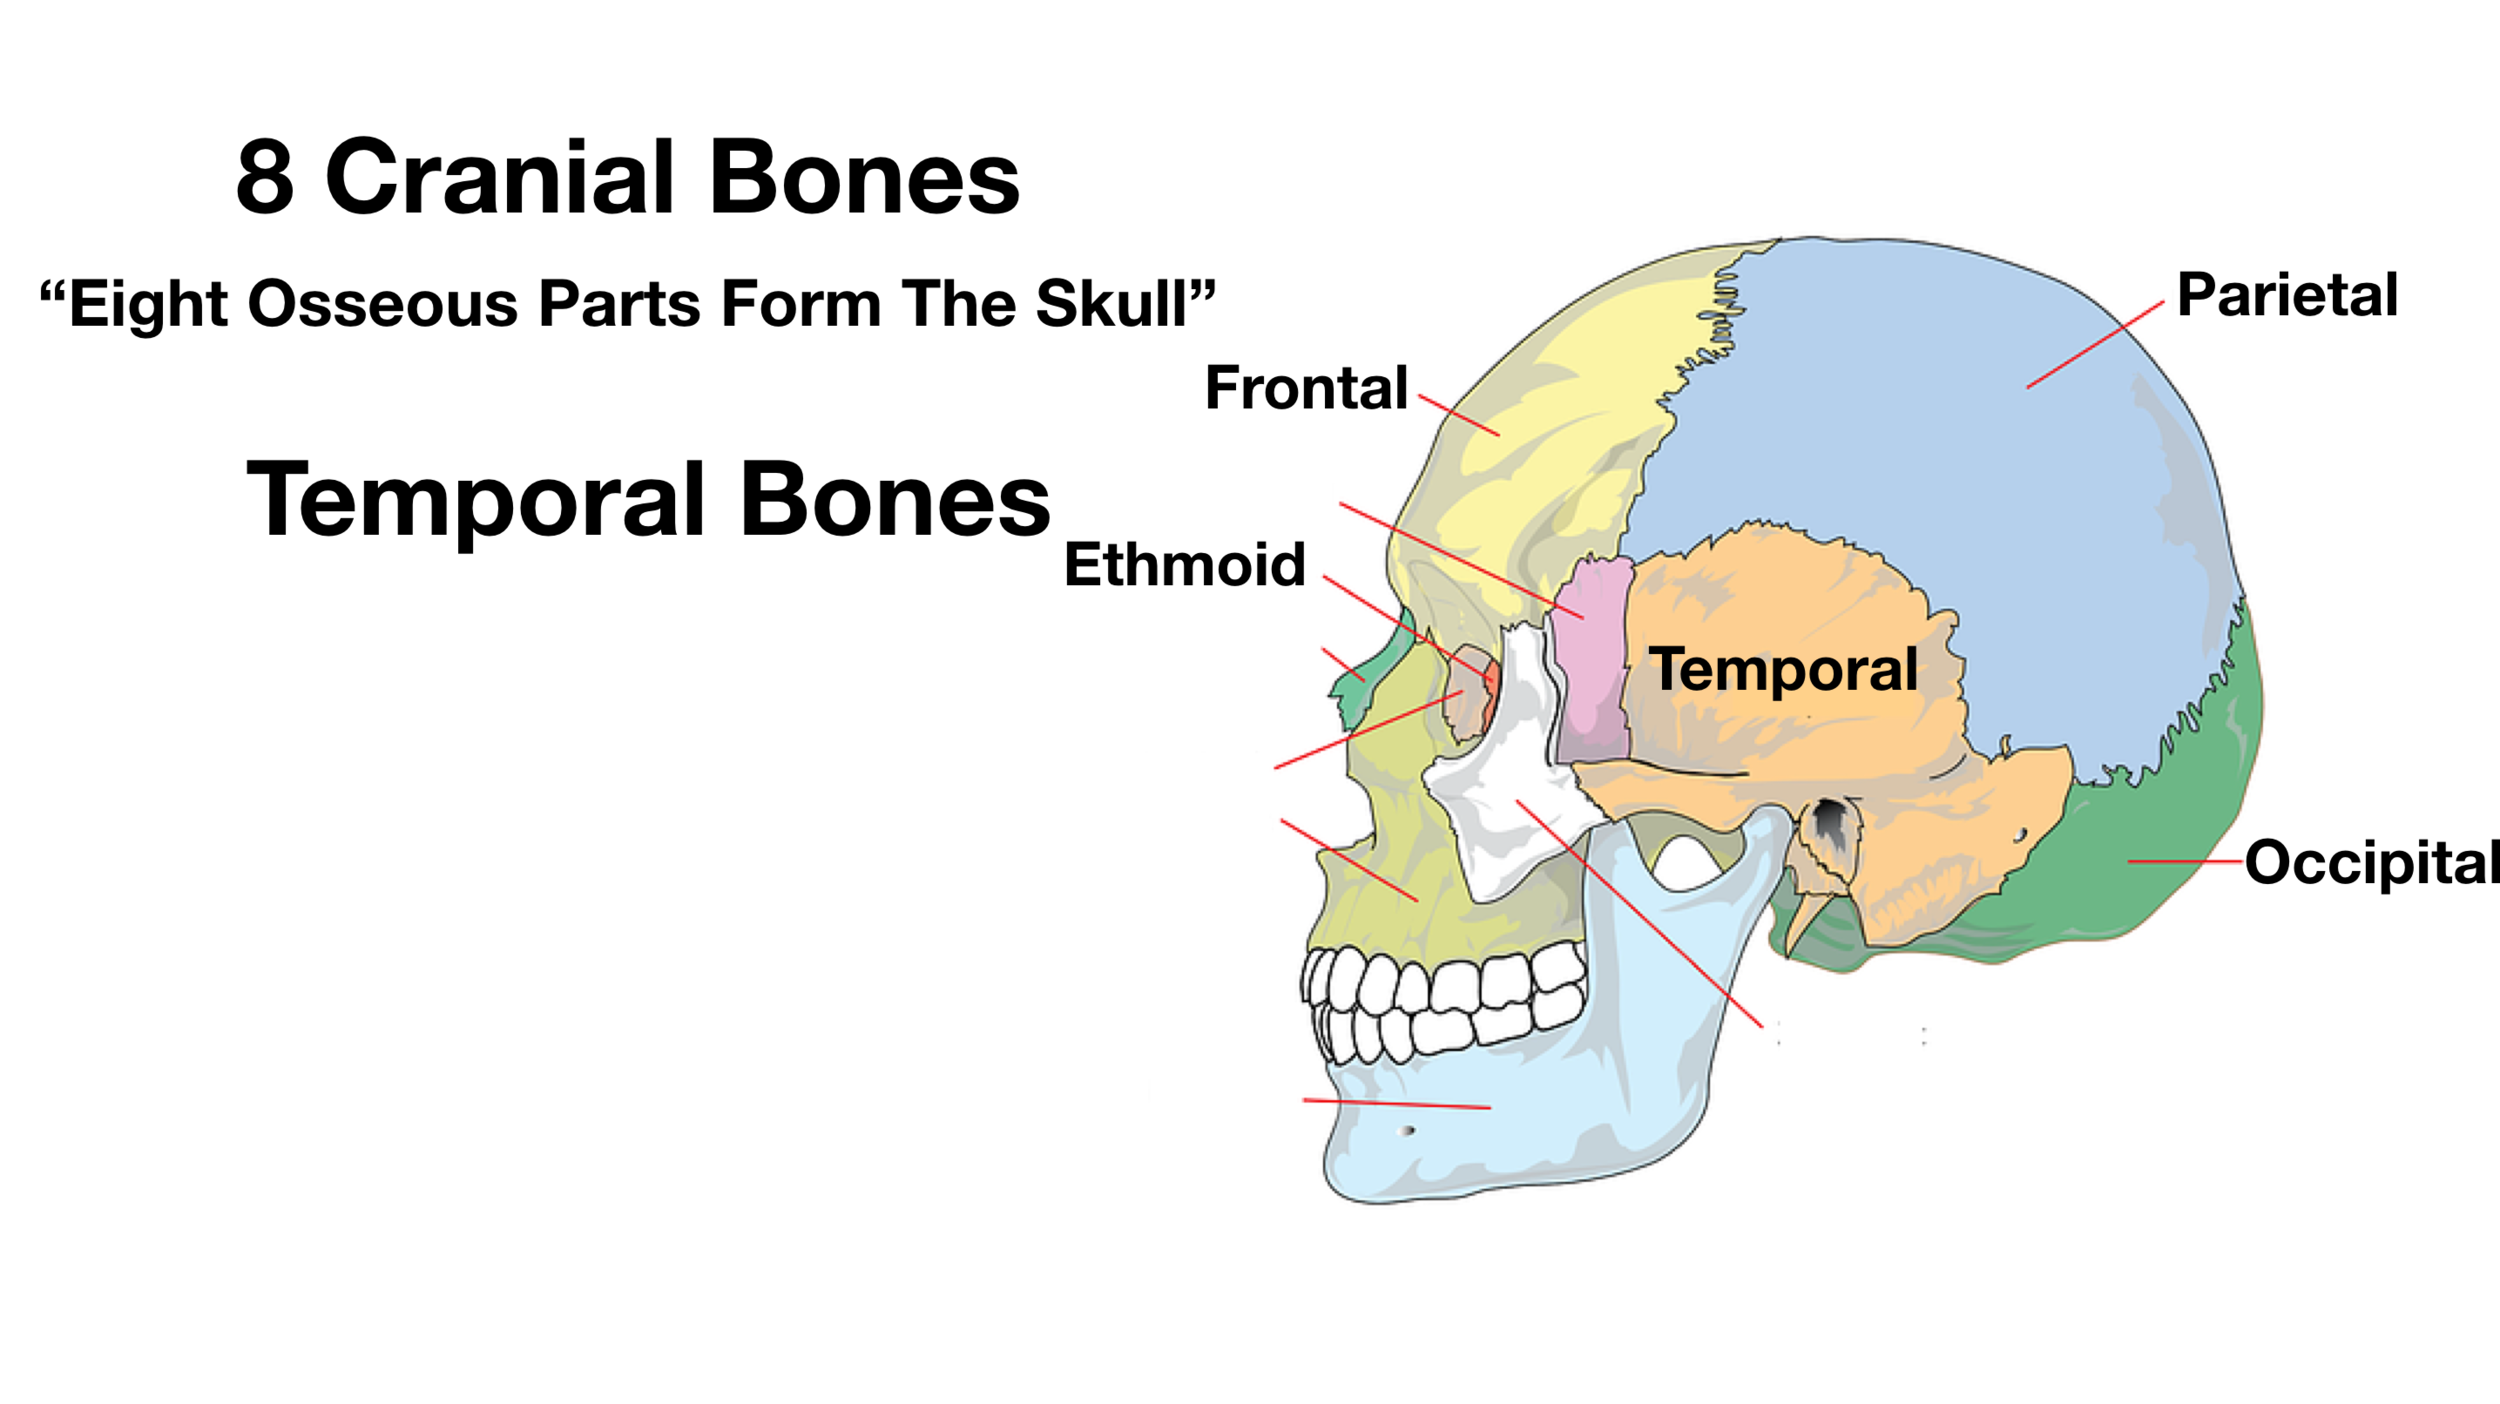 Skull Anatomy - Cranial Bone and Suture Labeled Diagram, Names